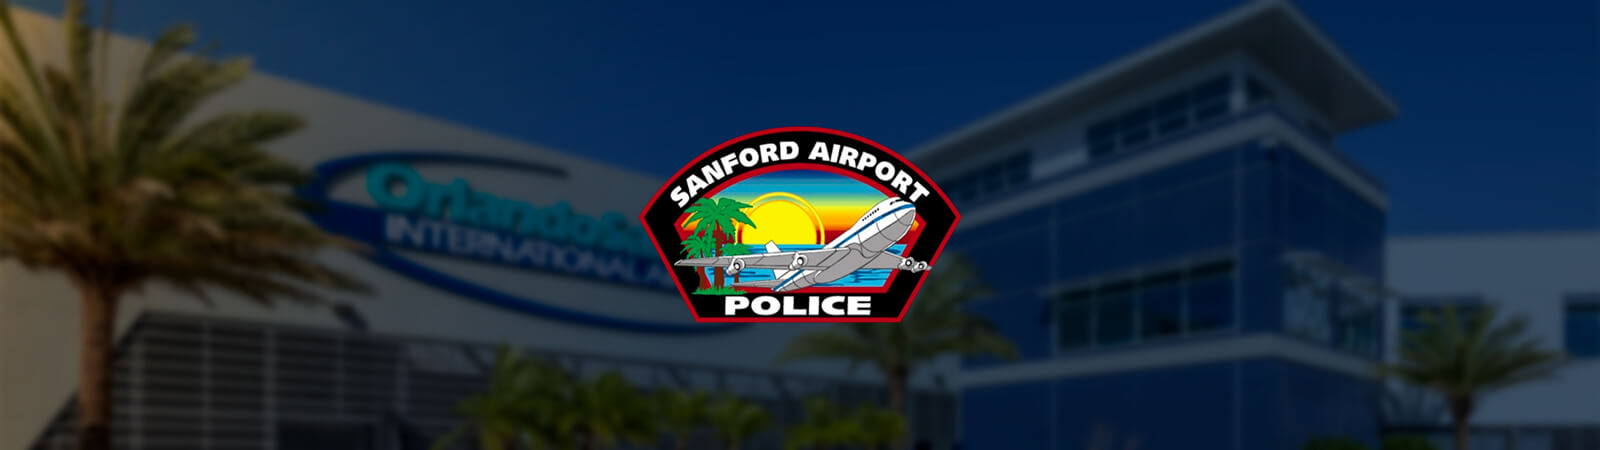 Sanford Airport Police Department